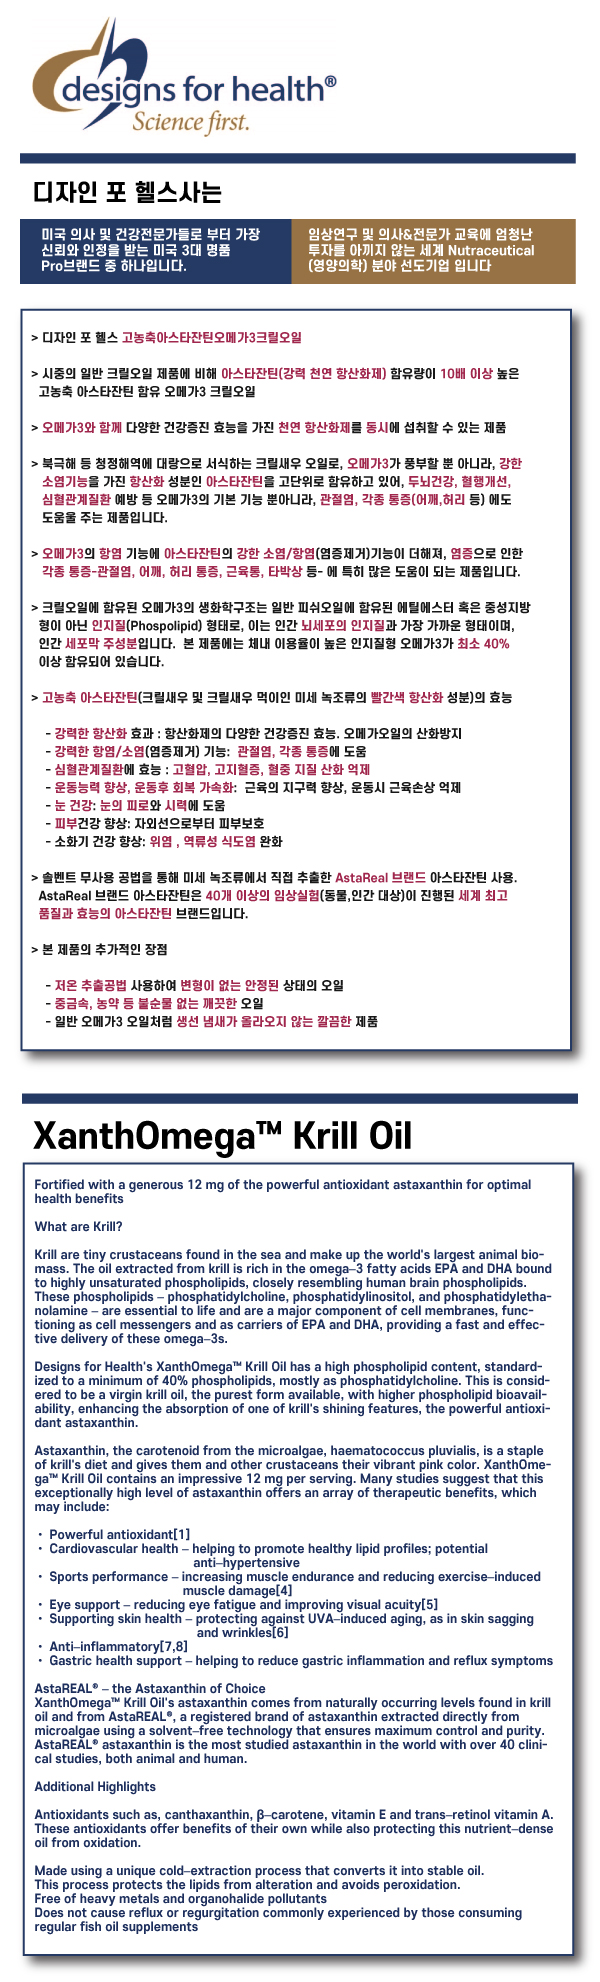 XanthOmega-Krill-Oil-60-softgels-renewed-version.jpg